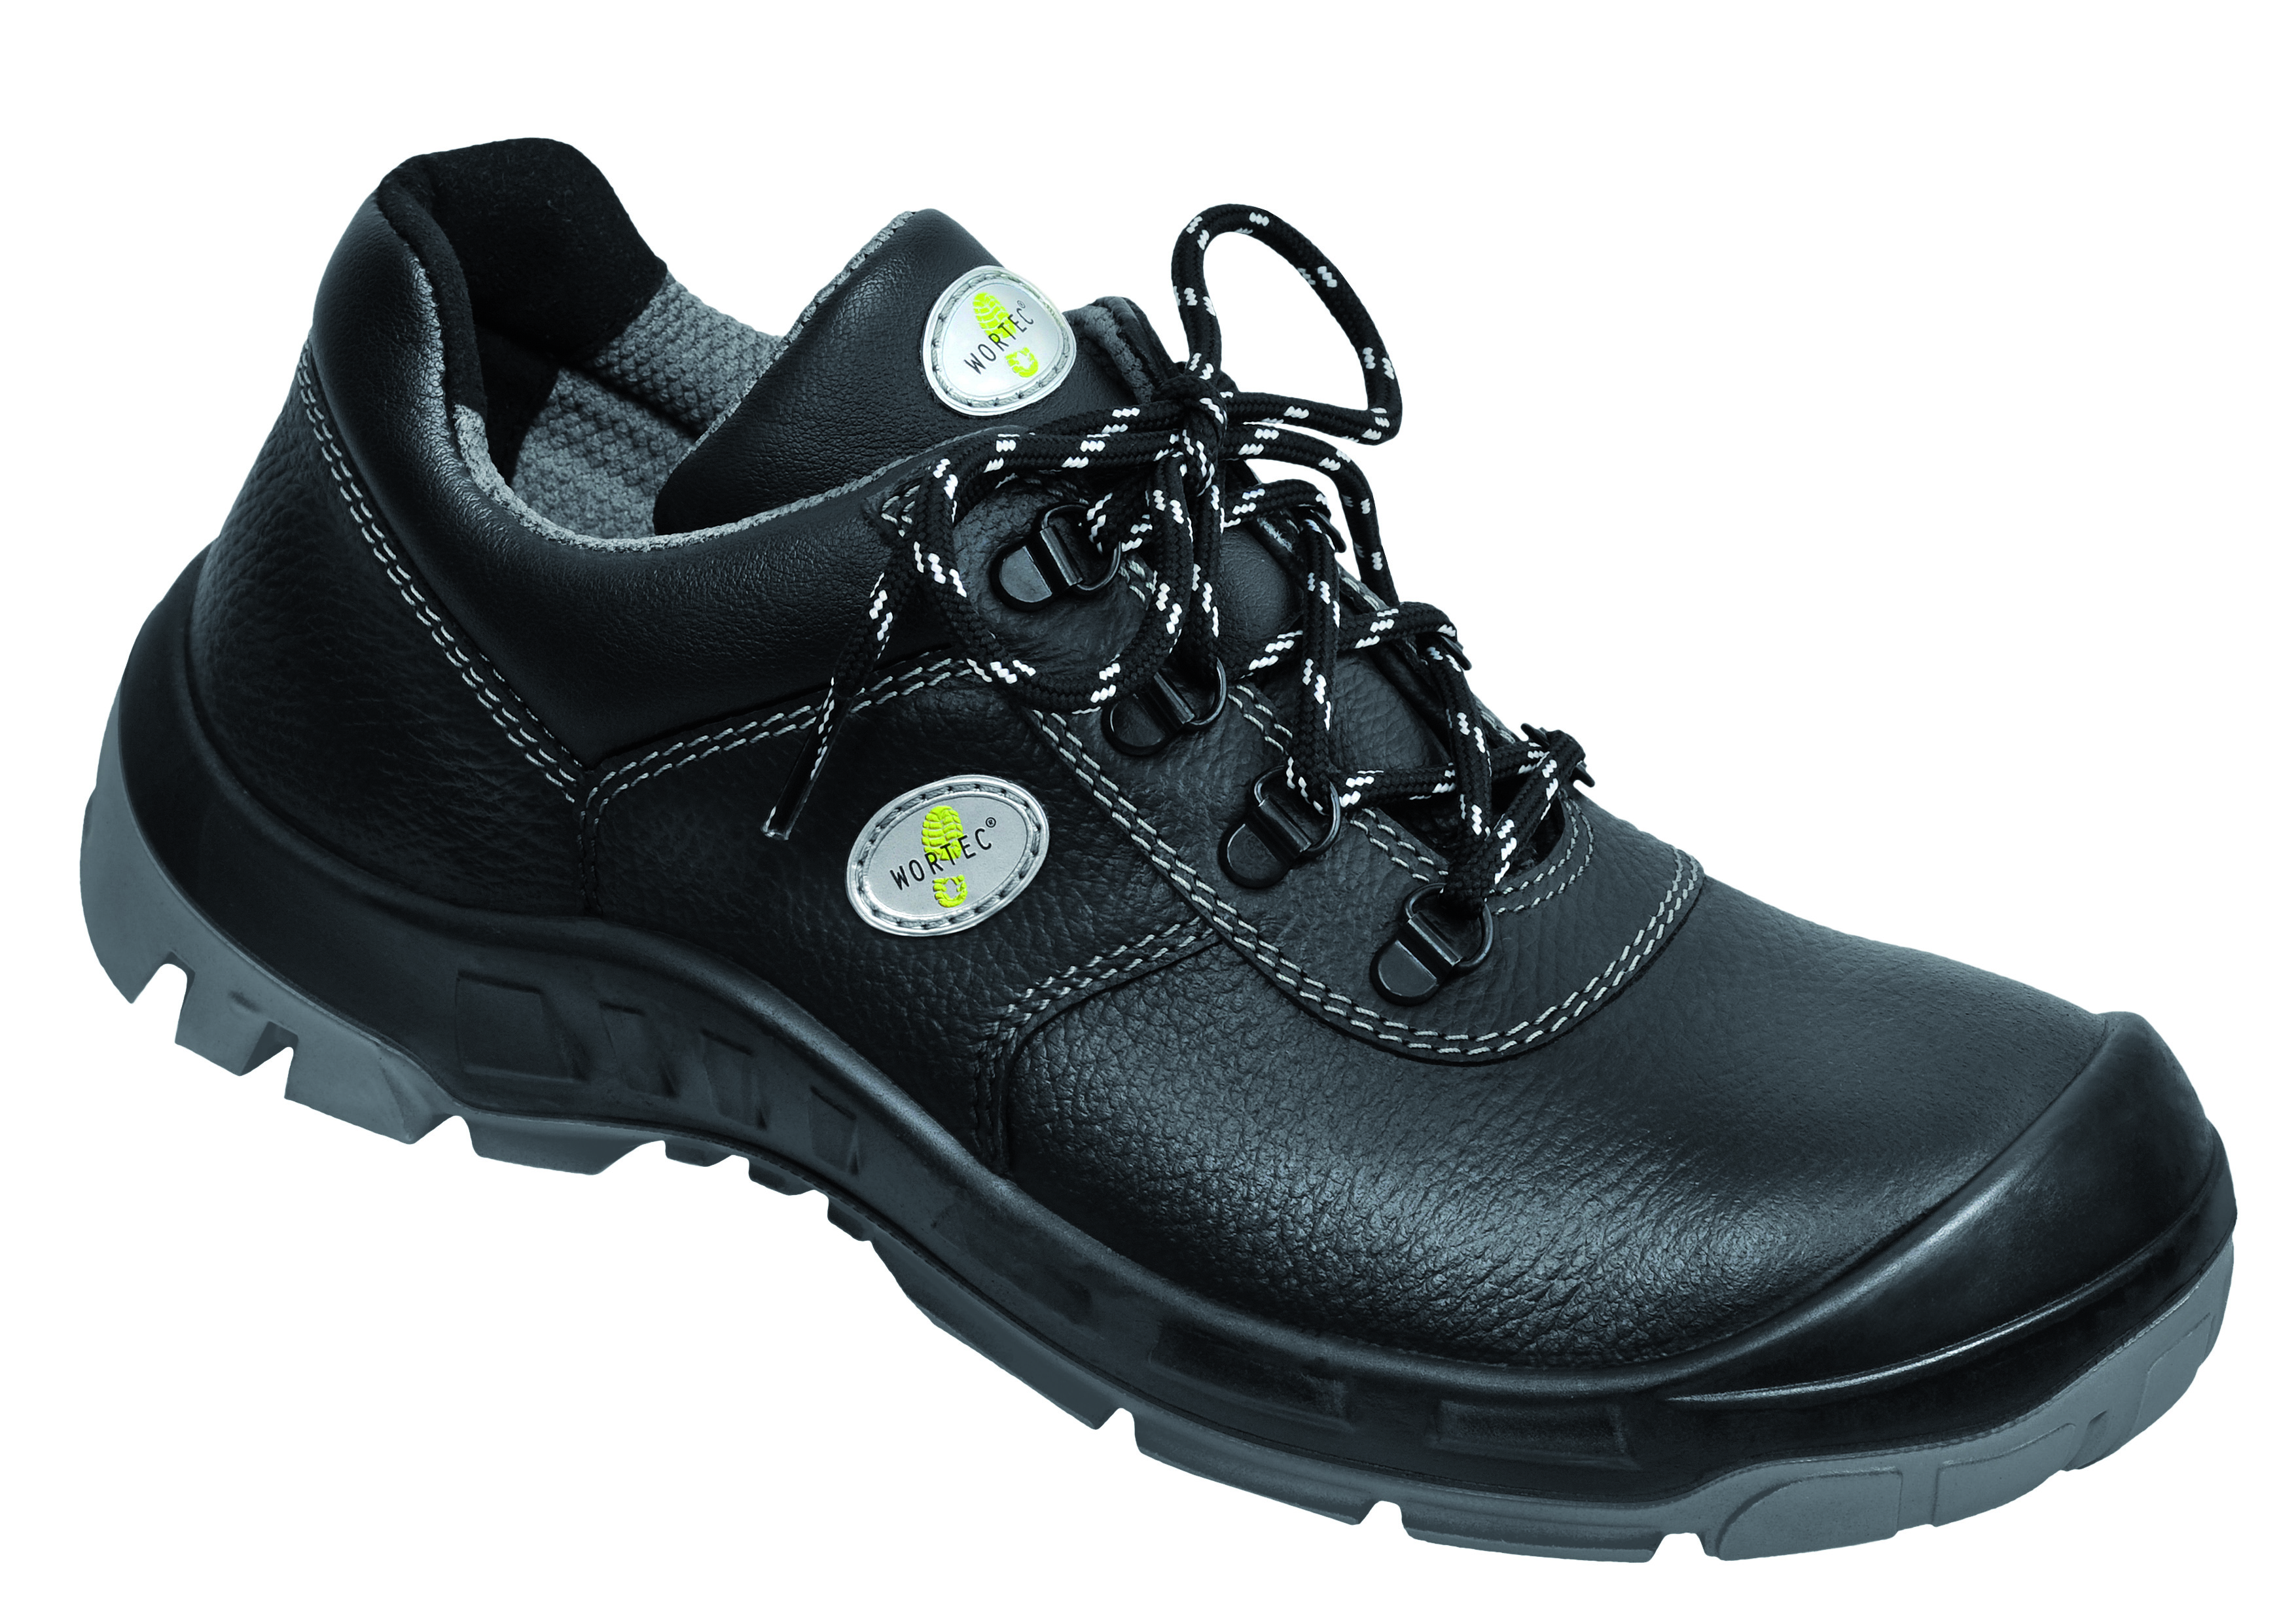 WORTEC-Footwear-LENNY, S2-Sicherheits-Arbeits-Berufs-Schuhe, Halbschuhe, schwarz